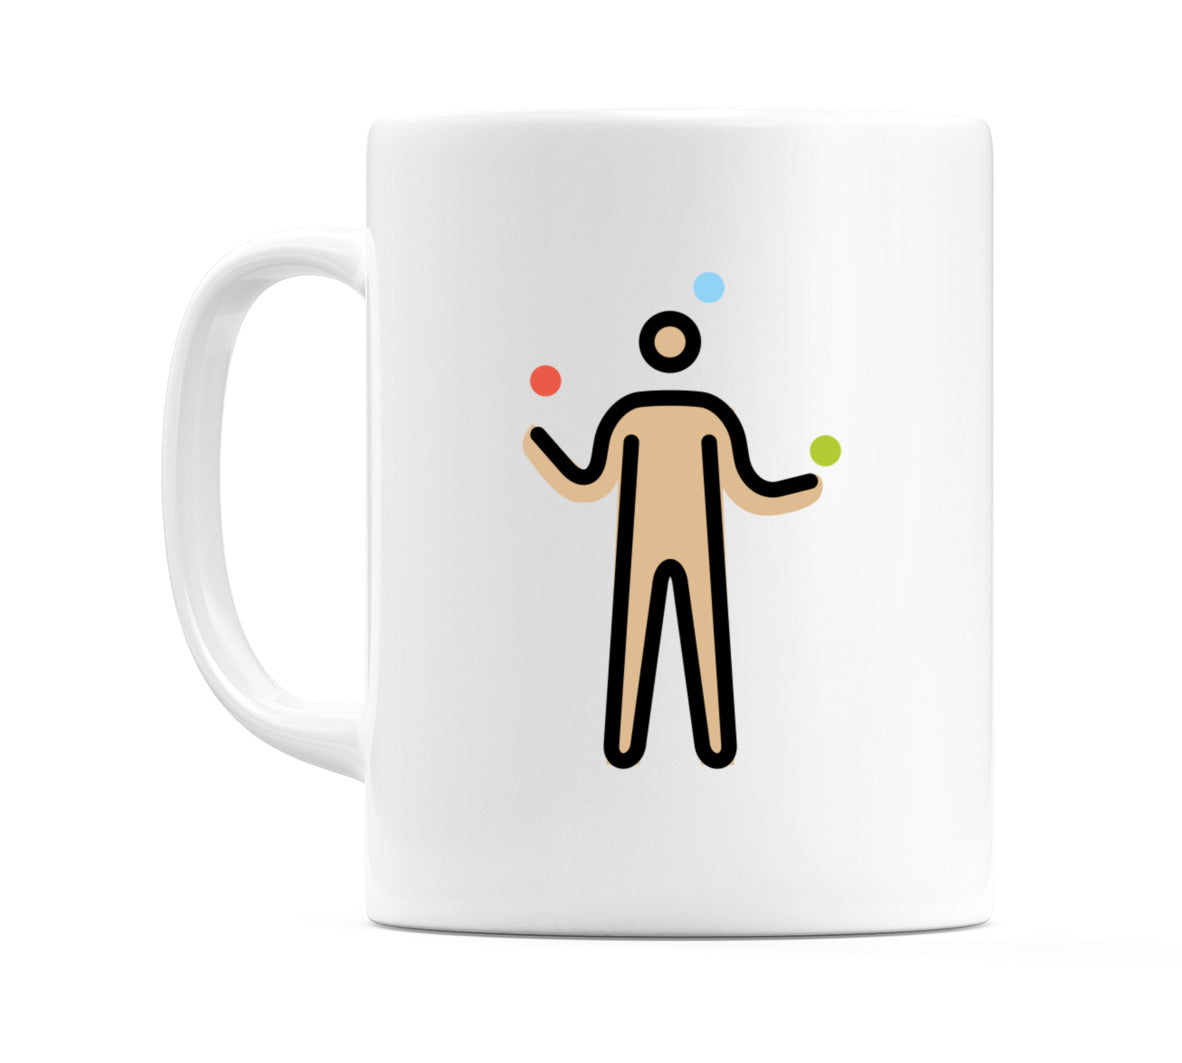 Person Juggling: Medium-Light Skin Tone Emoji Mug